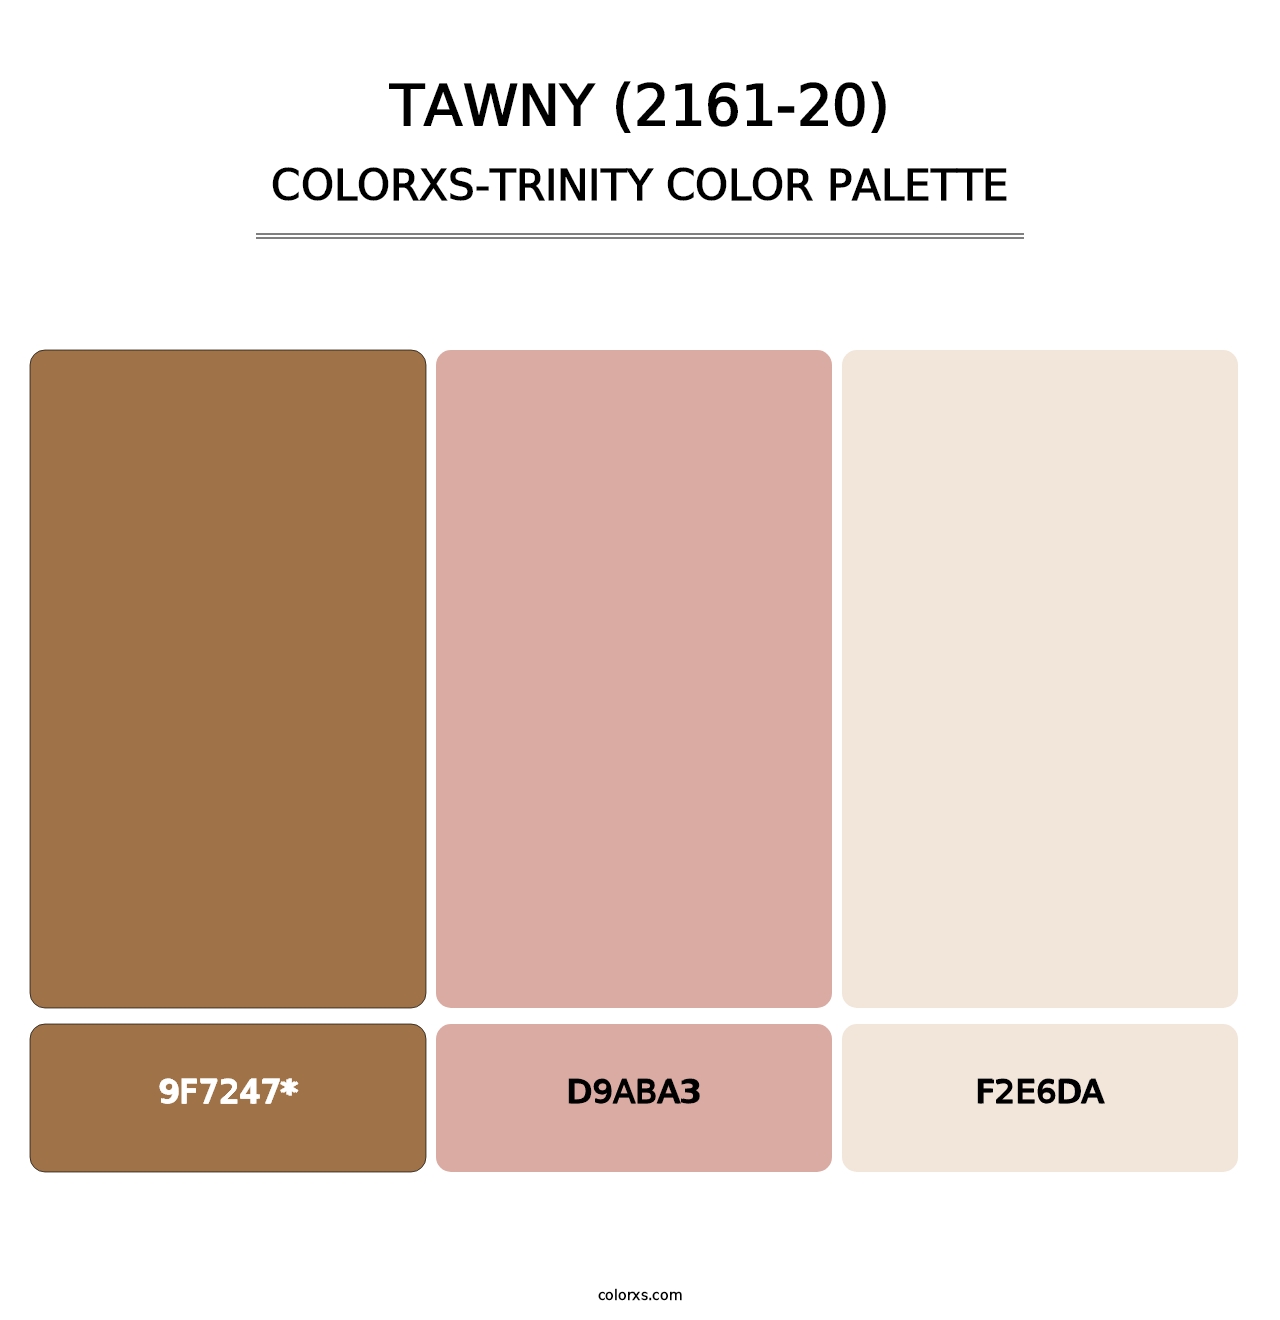 Tawny (2161-20) - Colorxs Trinity Palette